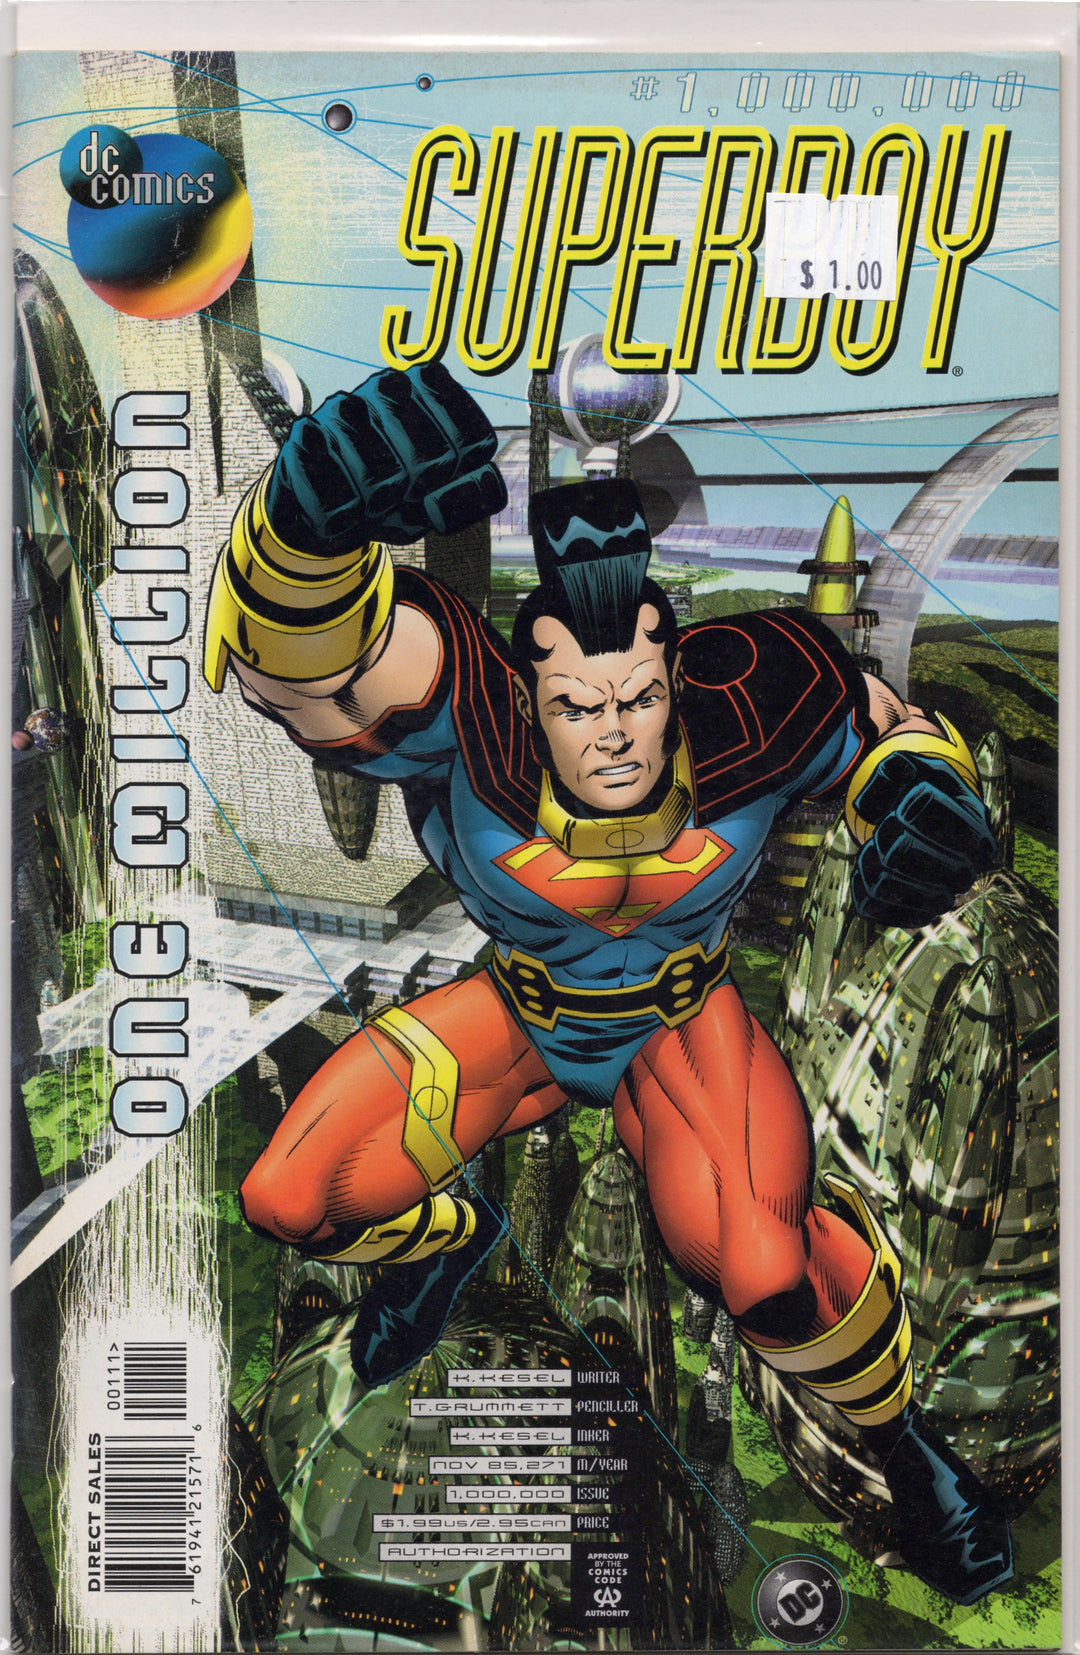 DC One Million Superboy #1